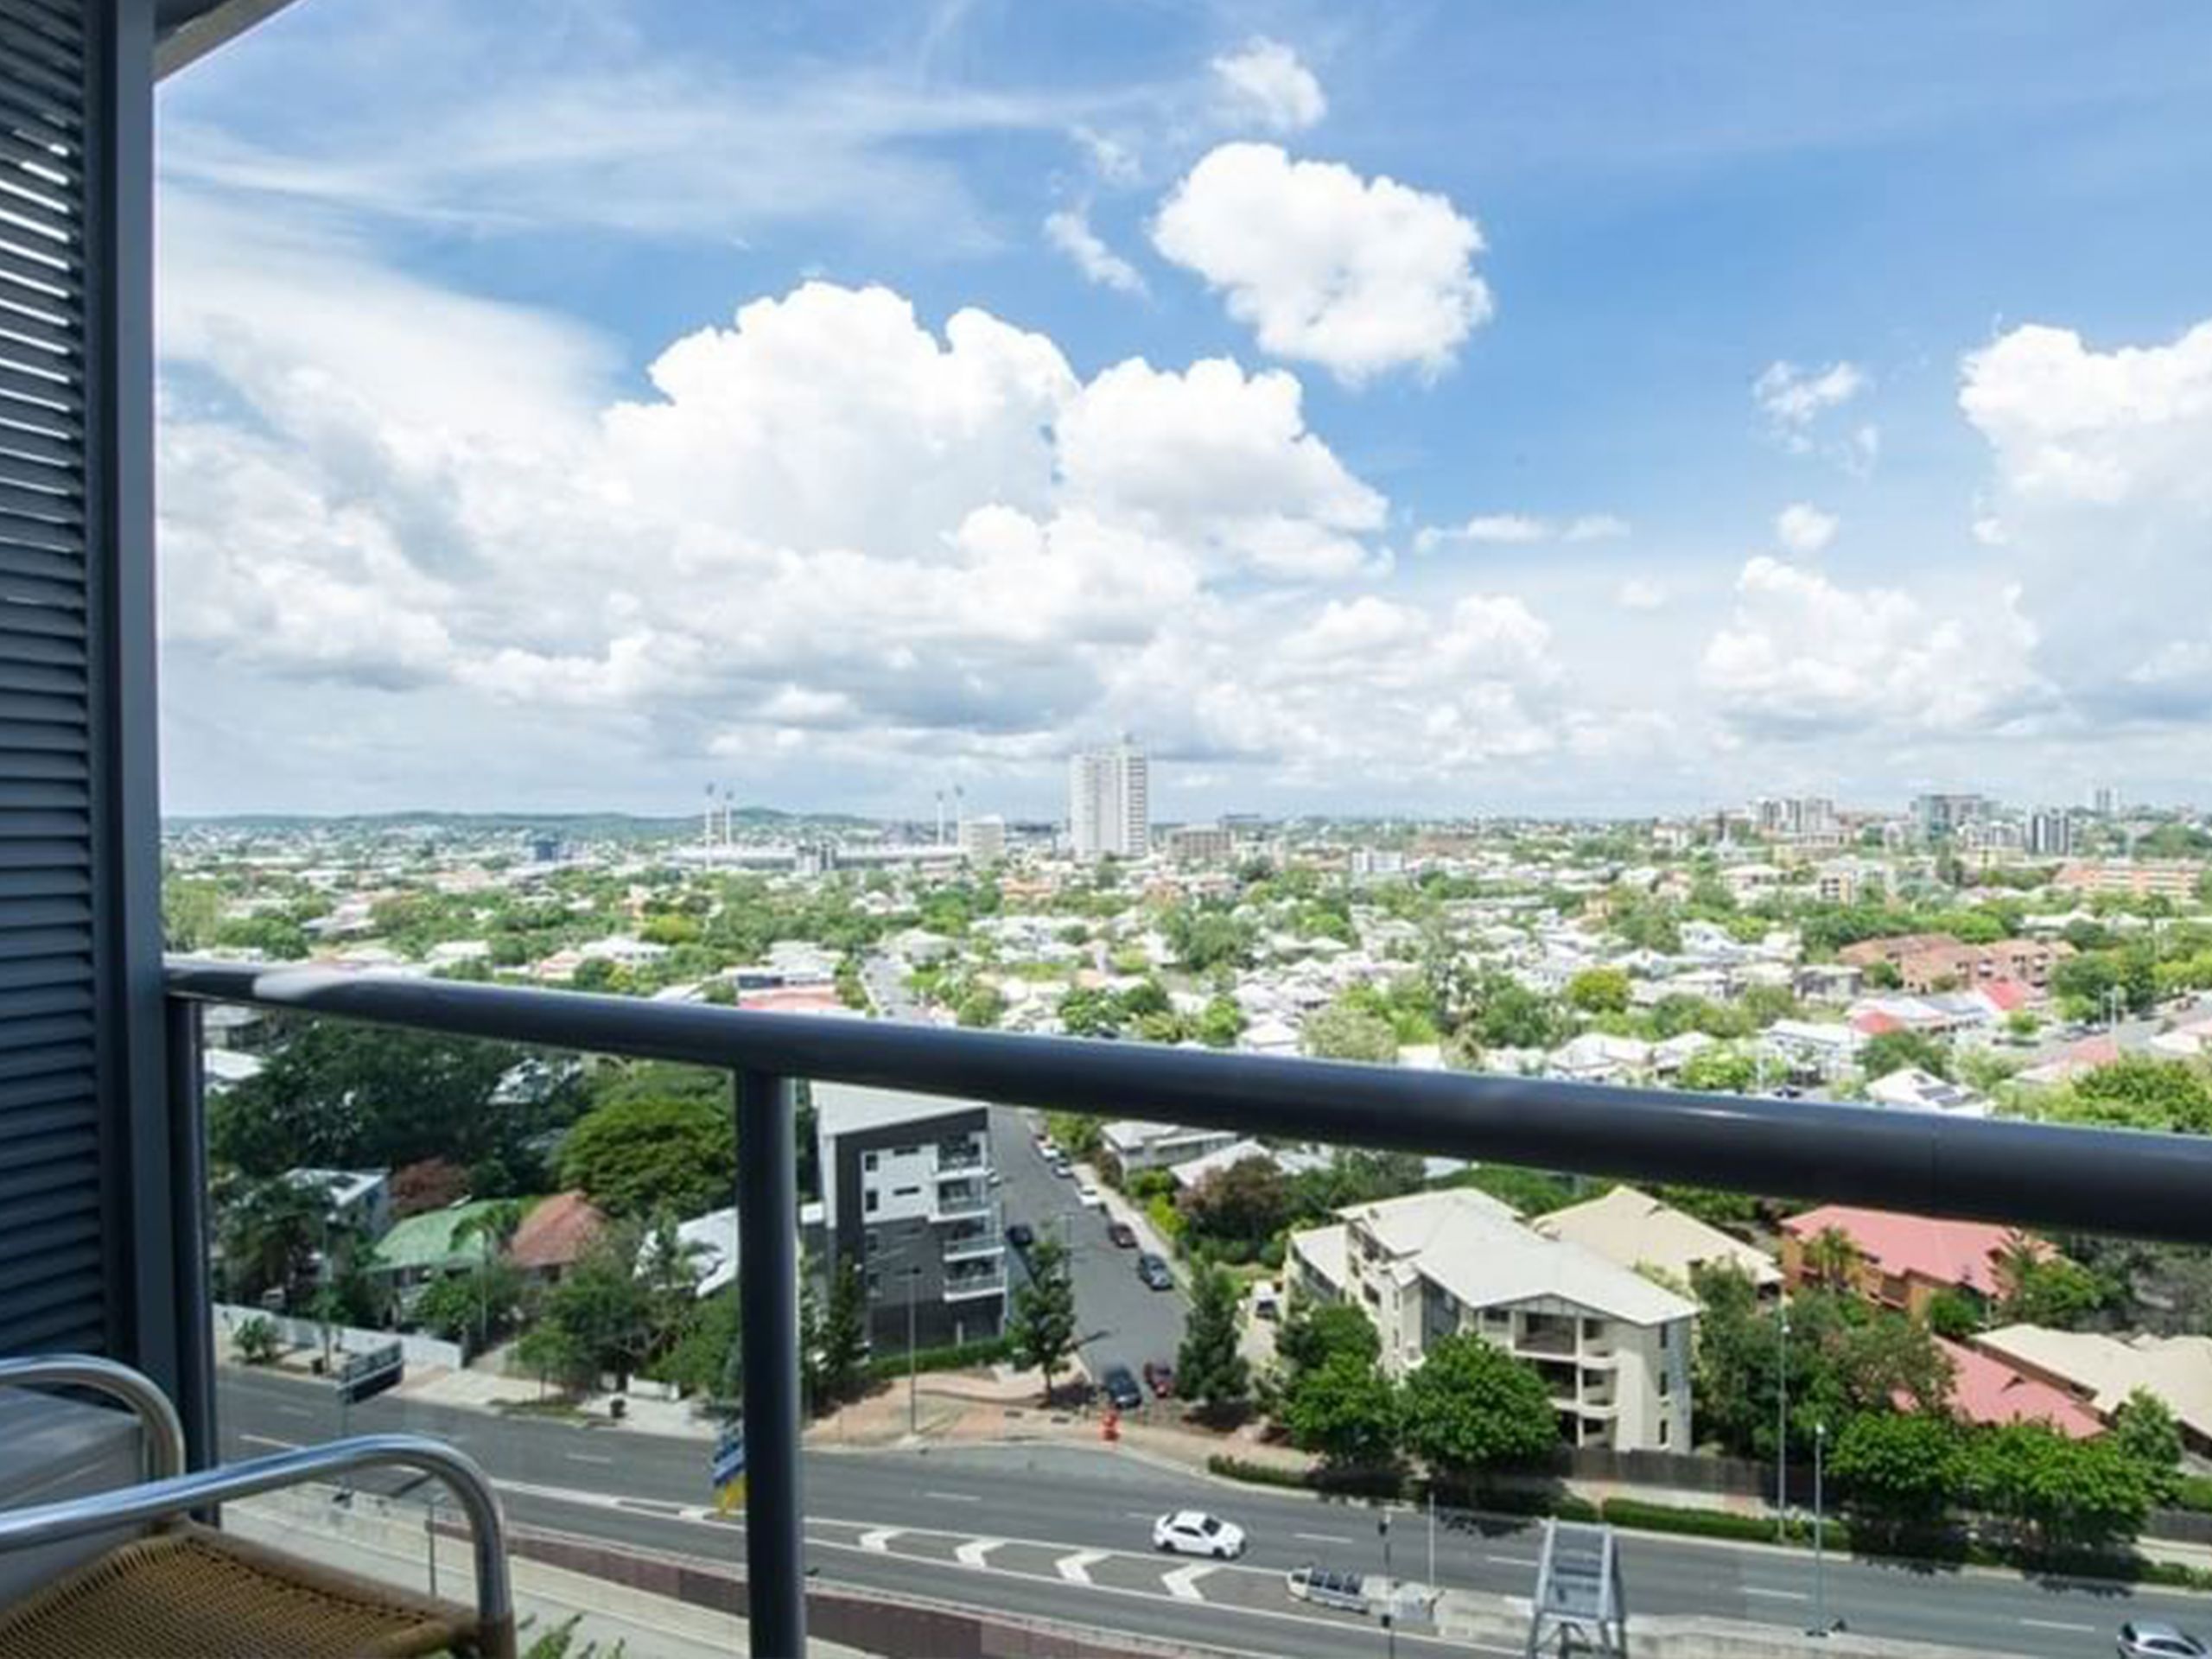 Shafston Student Apartment On Site, Brisbane city view